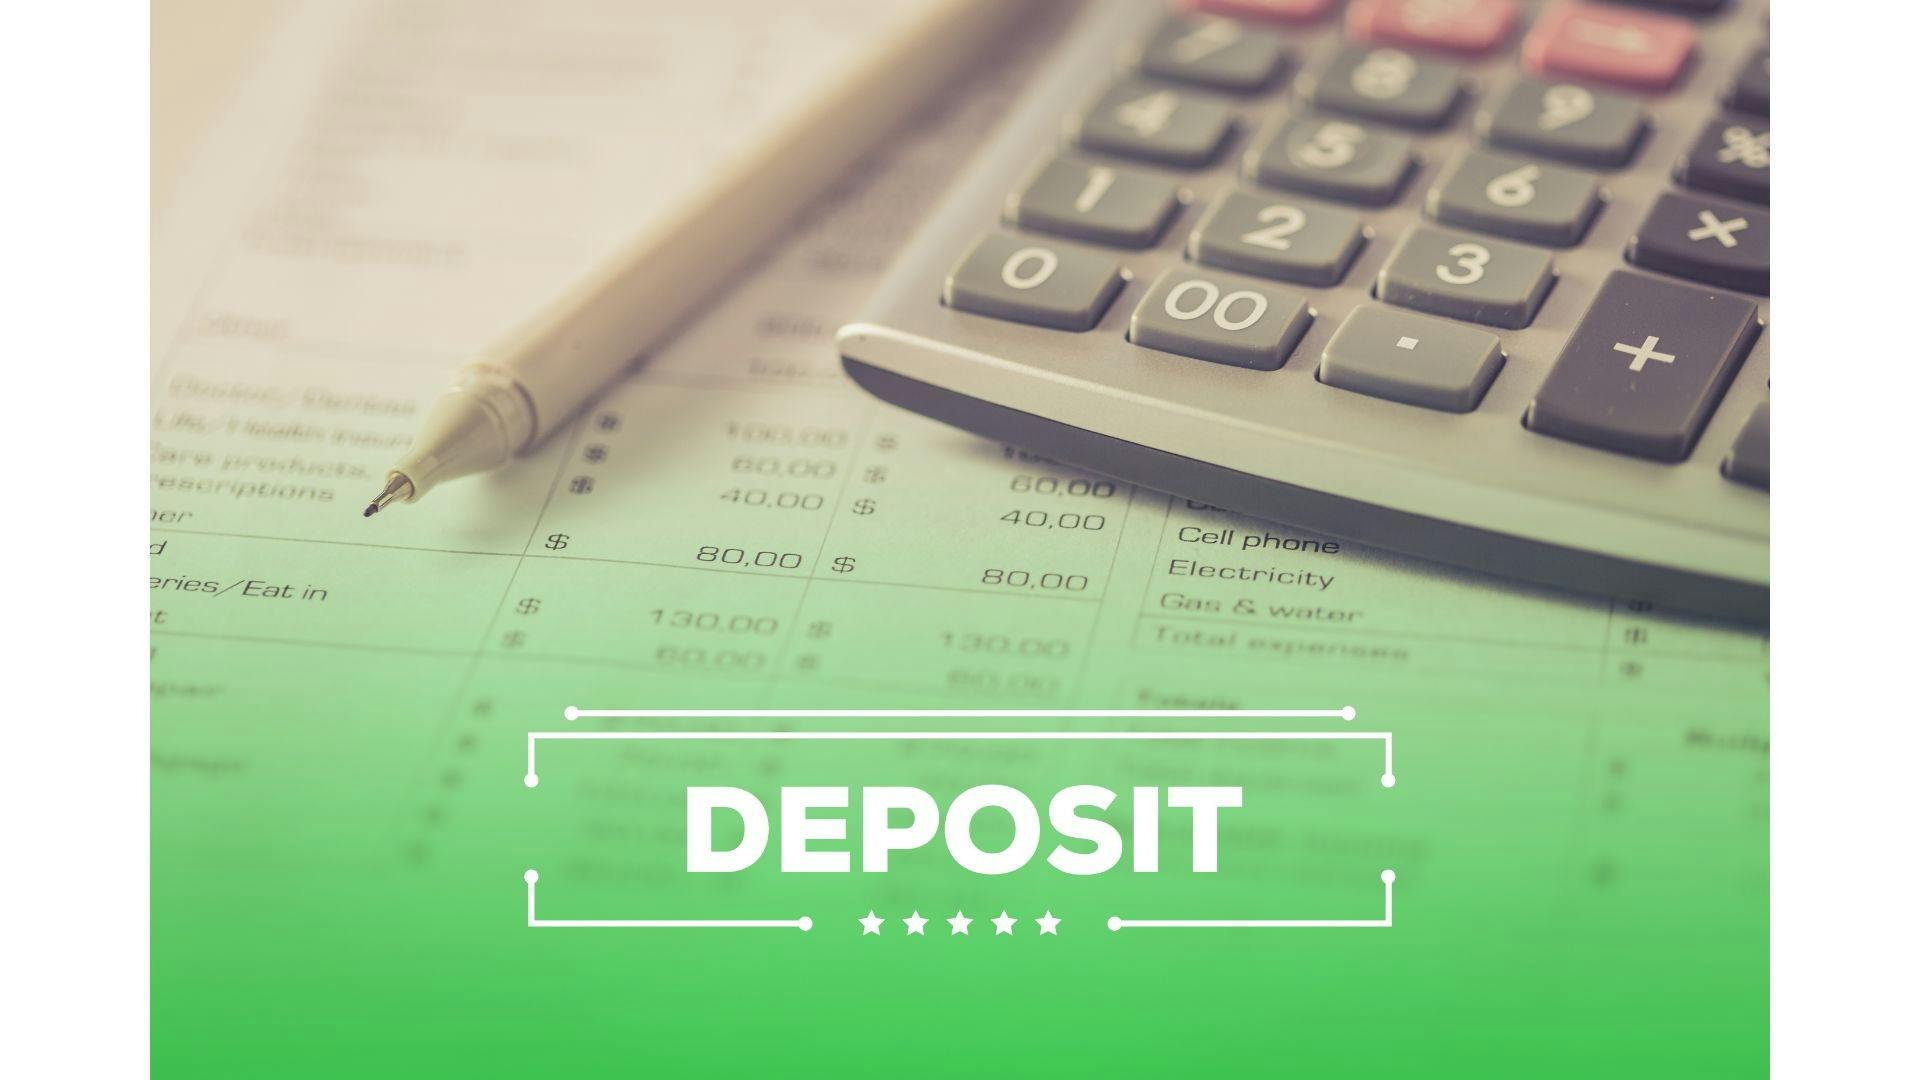 Deposit Invoice